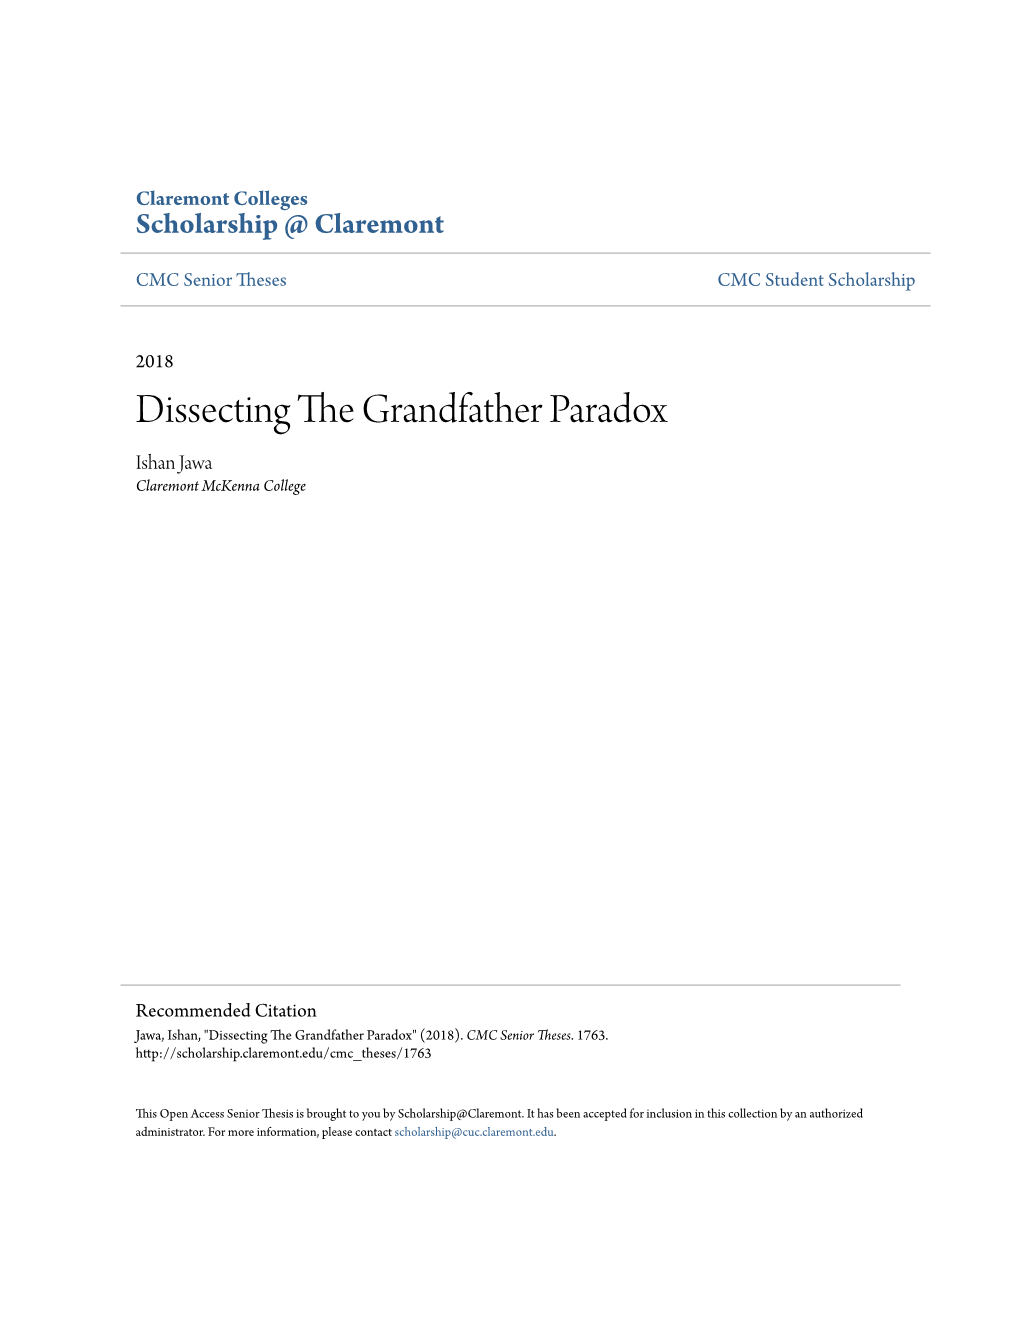 Dissecting the Grandfather Paradox Ishan Jawa Claremont Mckenna College